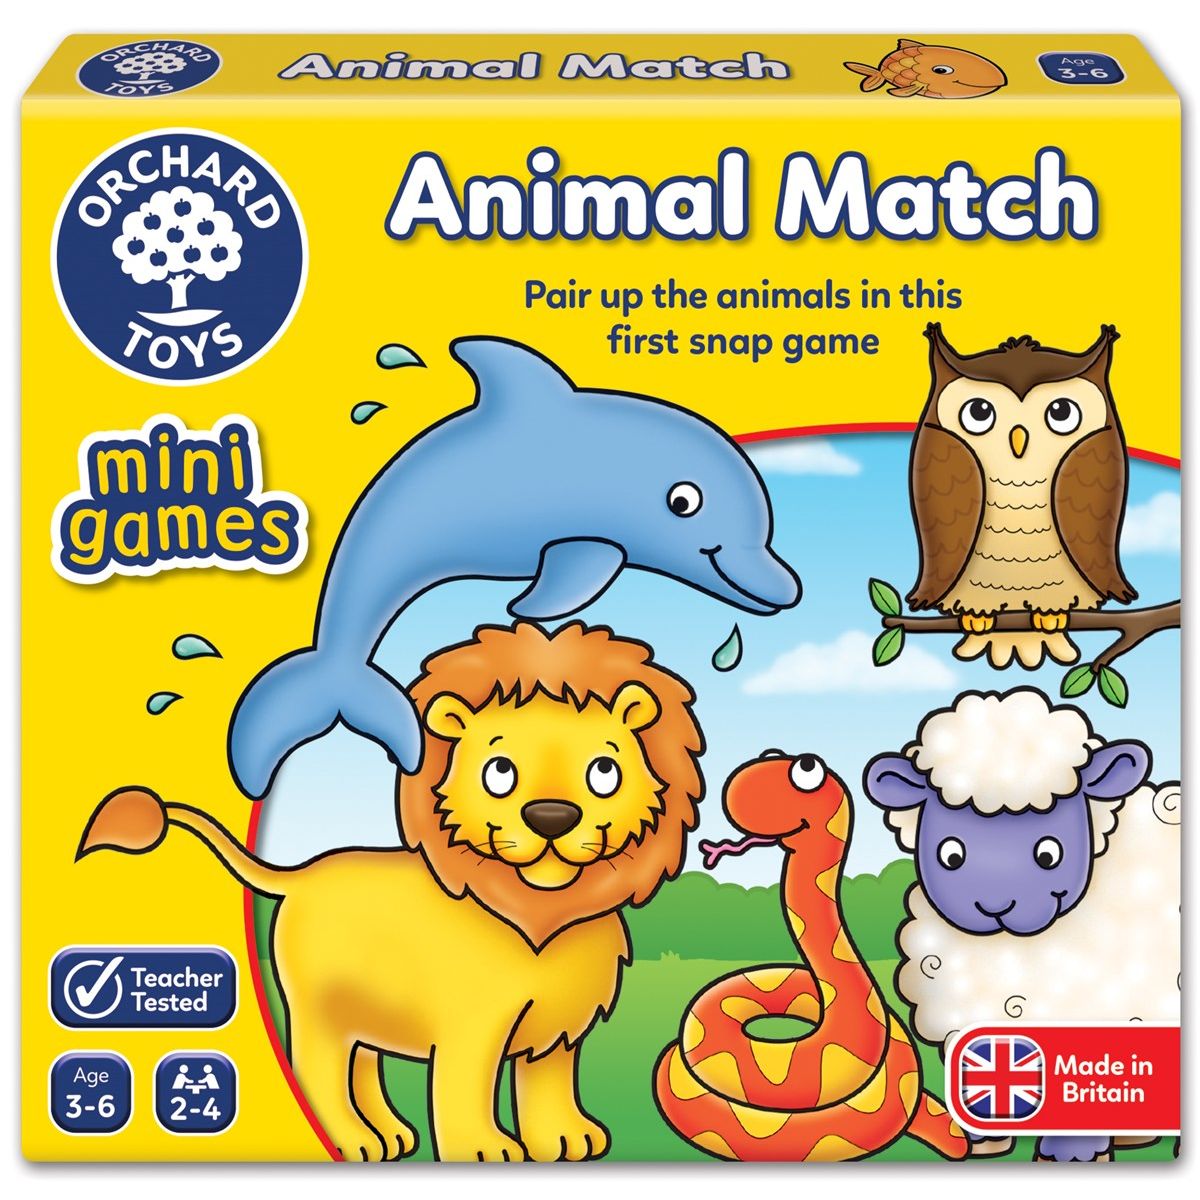 Animal match